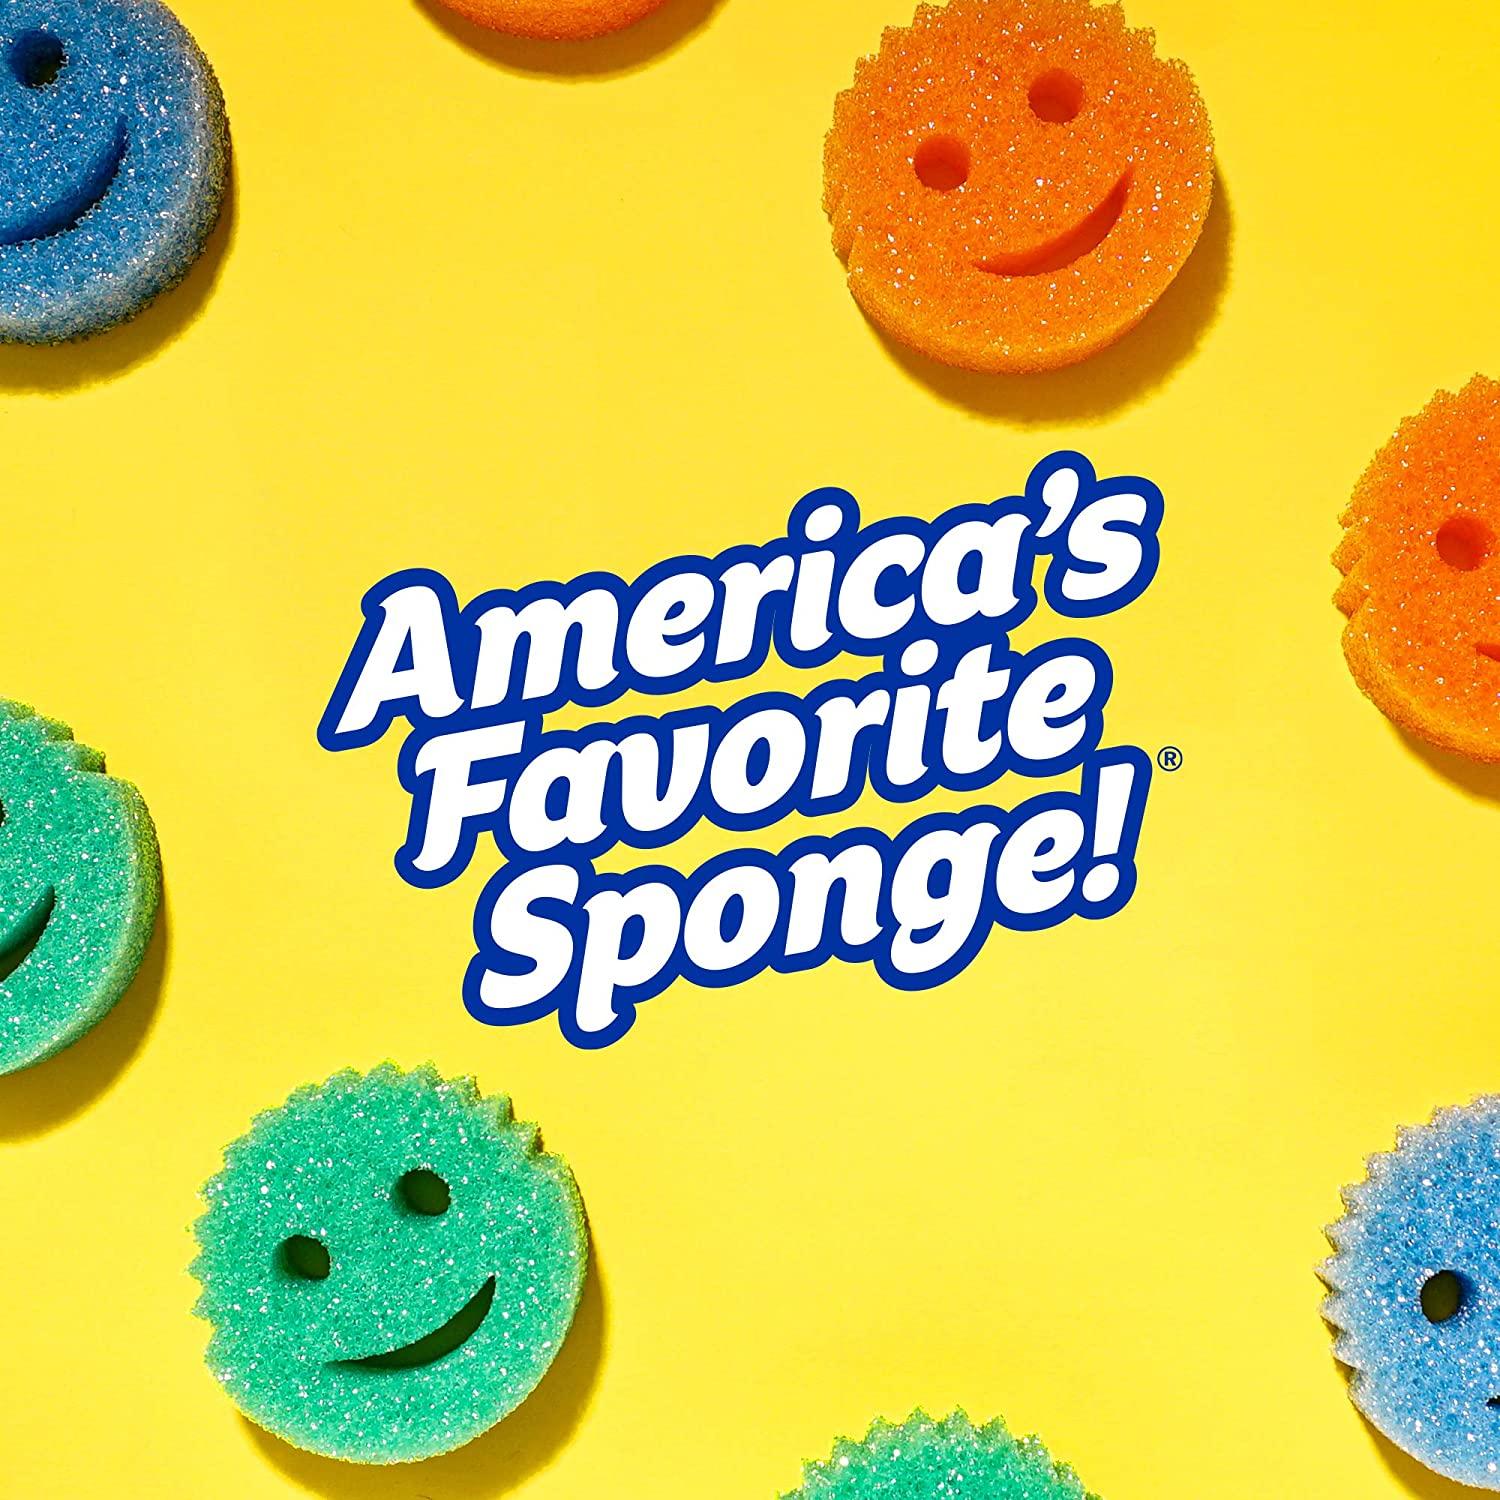 Scrub Daddy Sponge Sponge Caddy - Suction Sponge Holder, Sink Organizer  Kitchen Bathroom, Self Draining, Easy Dishwasher Safe, Universal Sponges  Scrubbers 